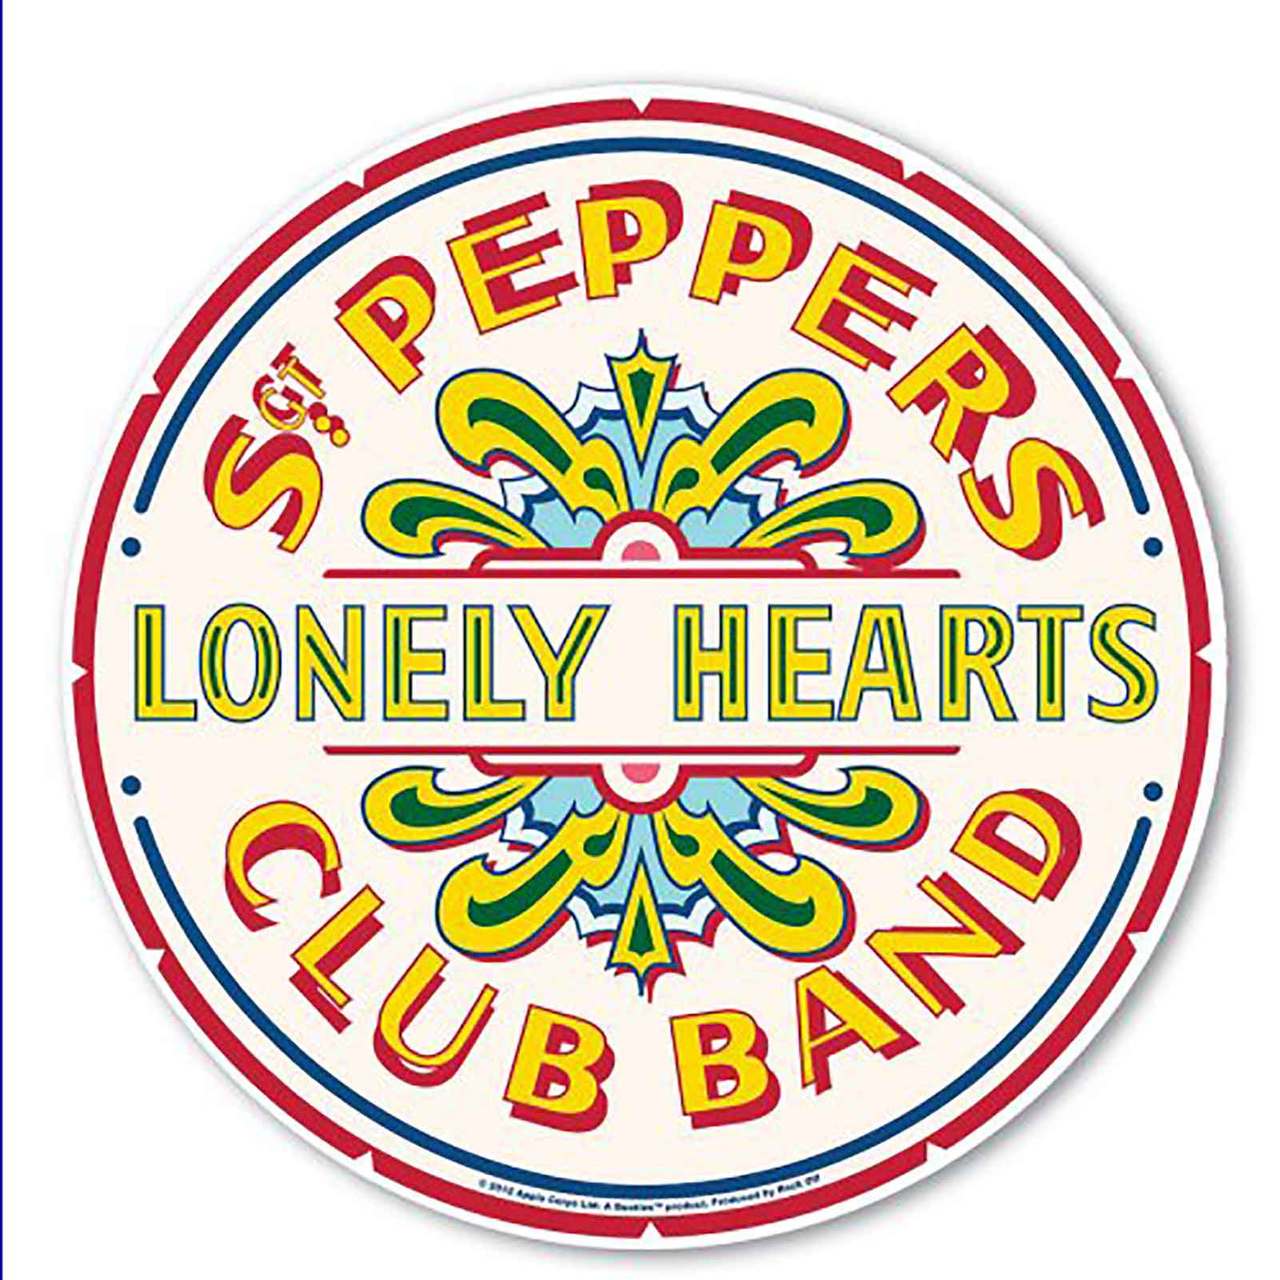 Beatles Logo - The Beatles Mouse Mat Pad Sgt Pepper Drum Band Logo Circular